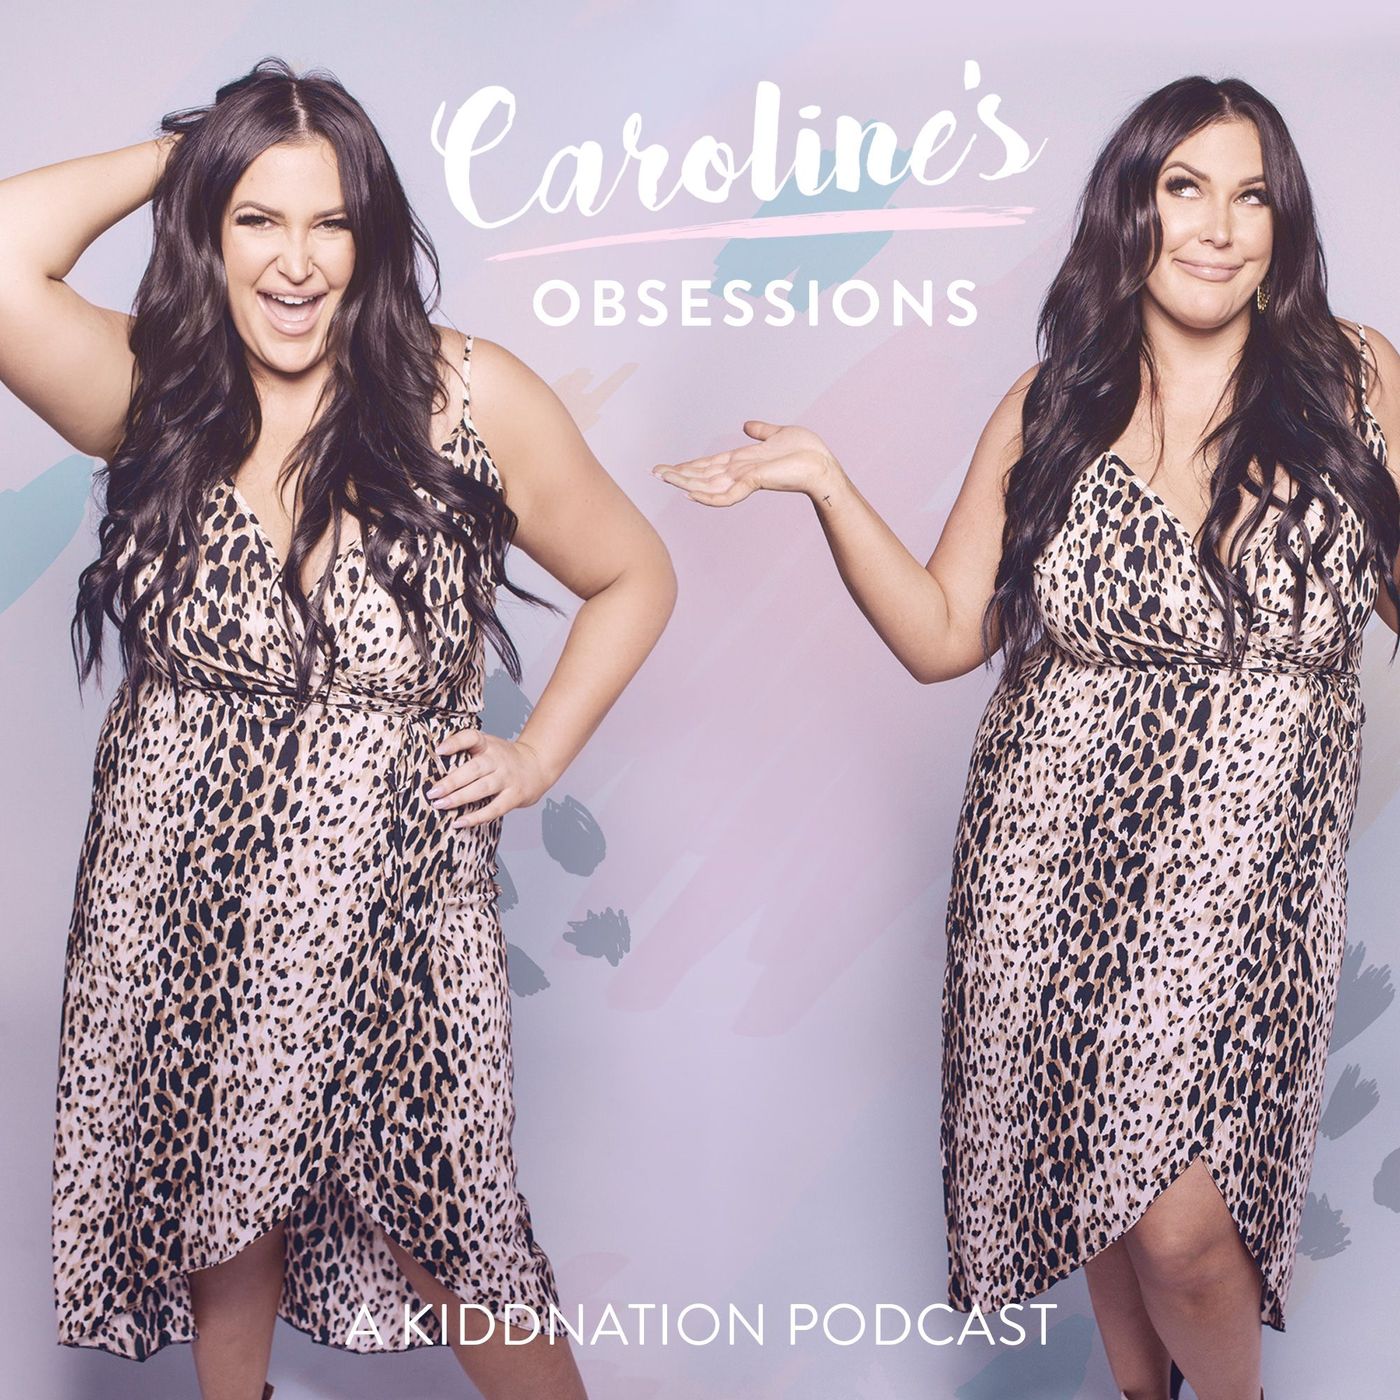 Caroline’s Obsessions